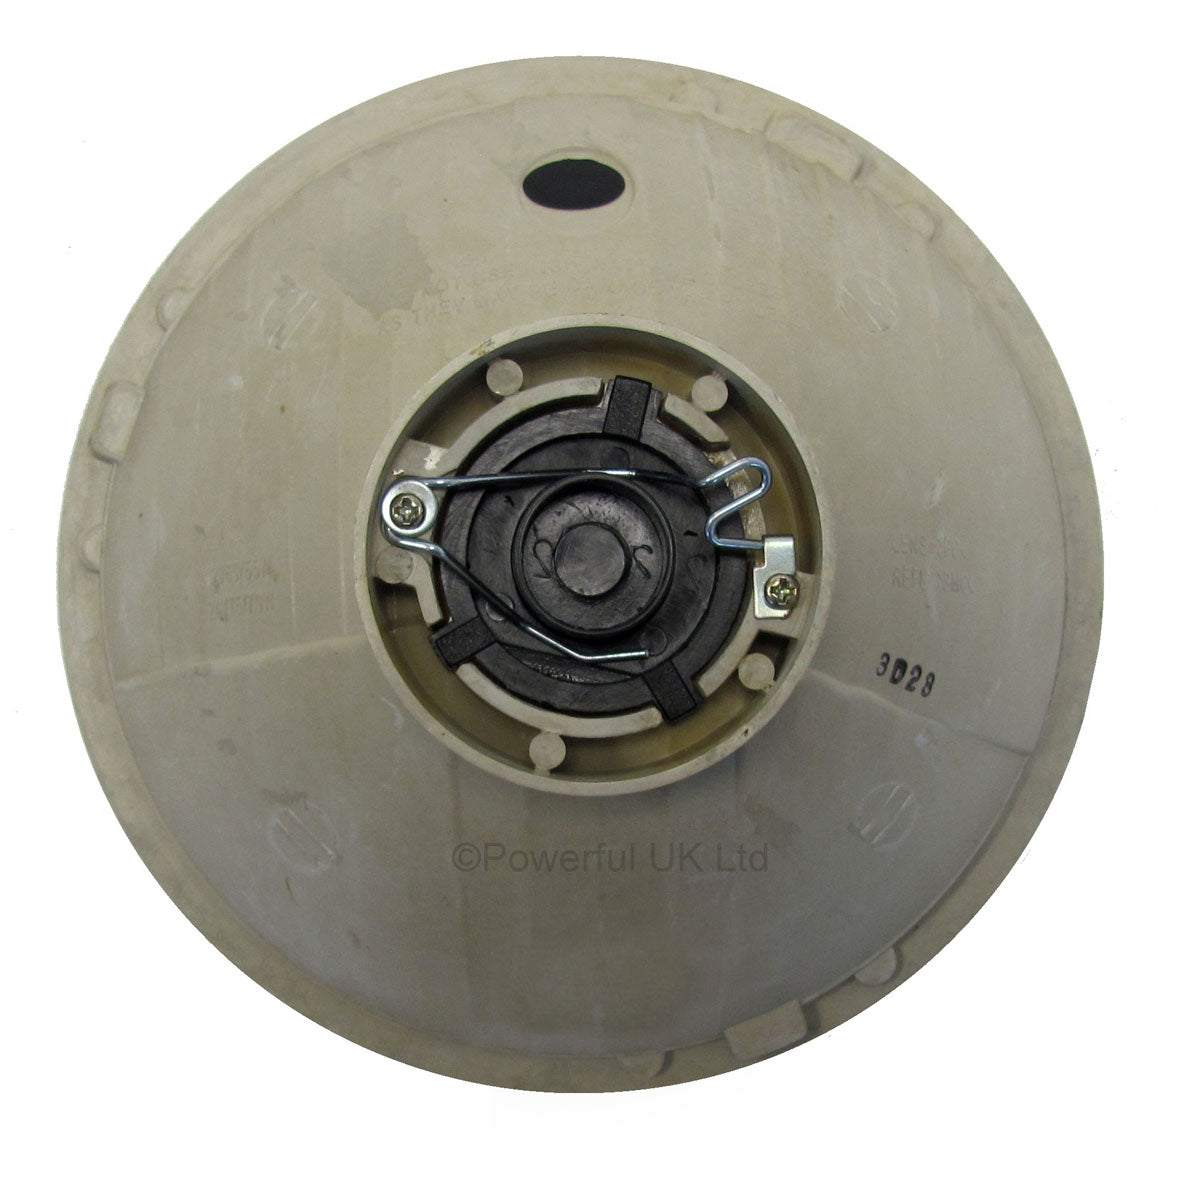 MG Crystal Halogen Headlight Upgrade - Polycarbonate Lens